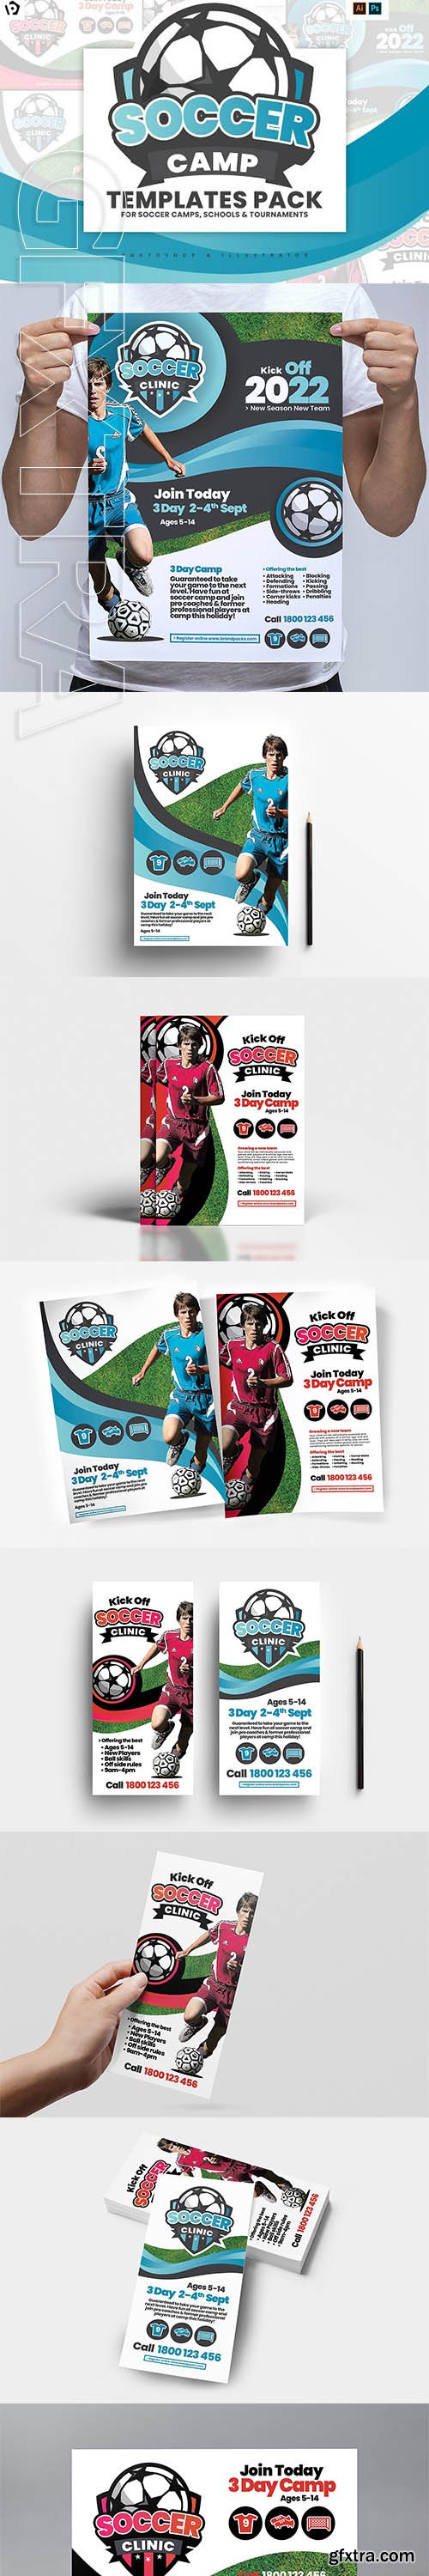 CreativeMarket - Soccer Camp Templates Pack 2965867